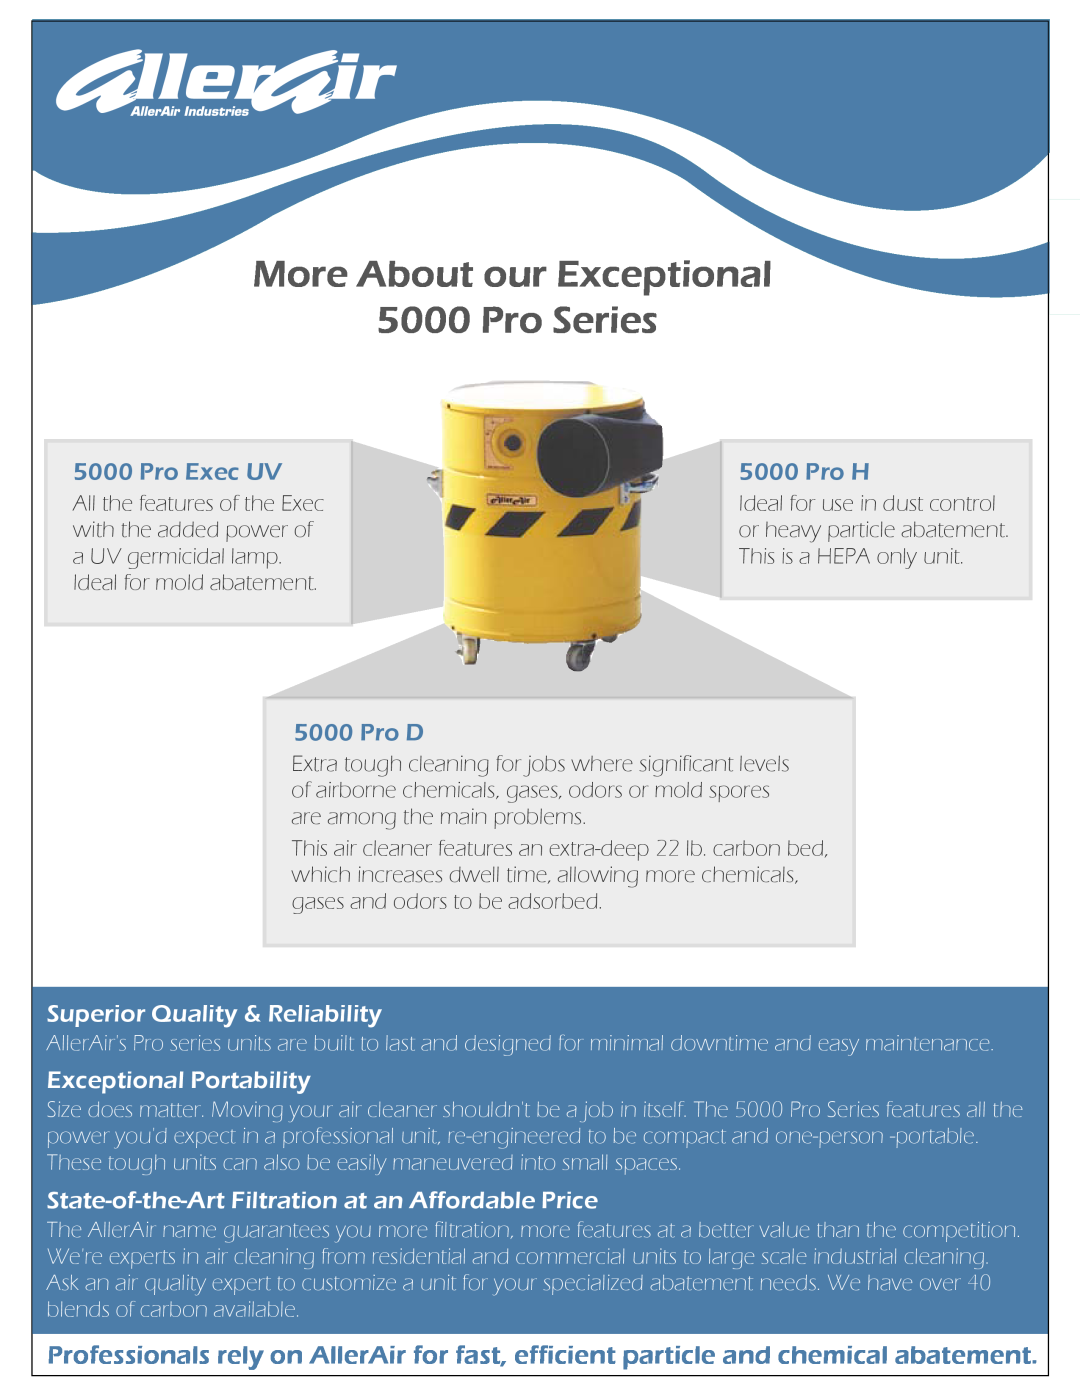 AllerAir 5000 Exec Pro More About our Exceptional 5000 Pro Series, Pro Exec UV, Pro D, Superior Quality & Reliability 